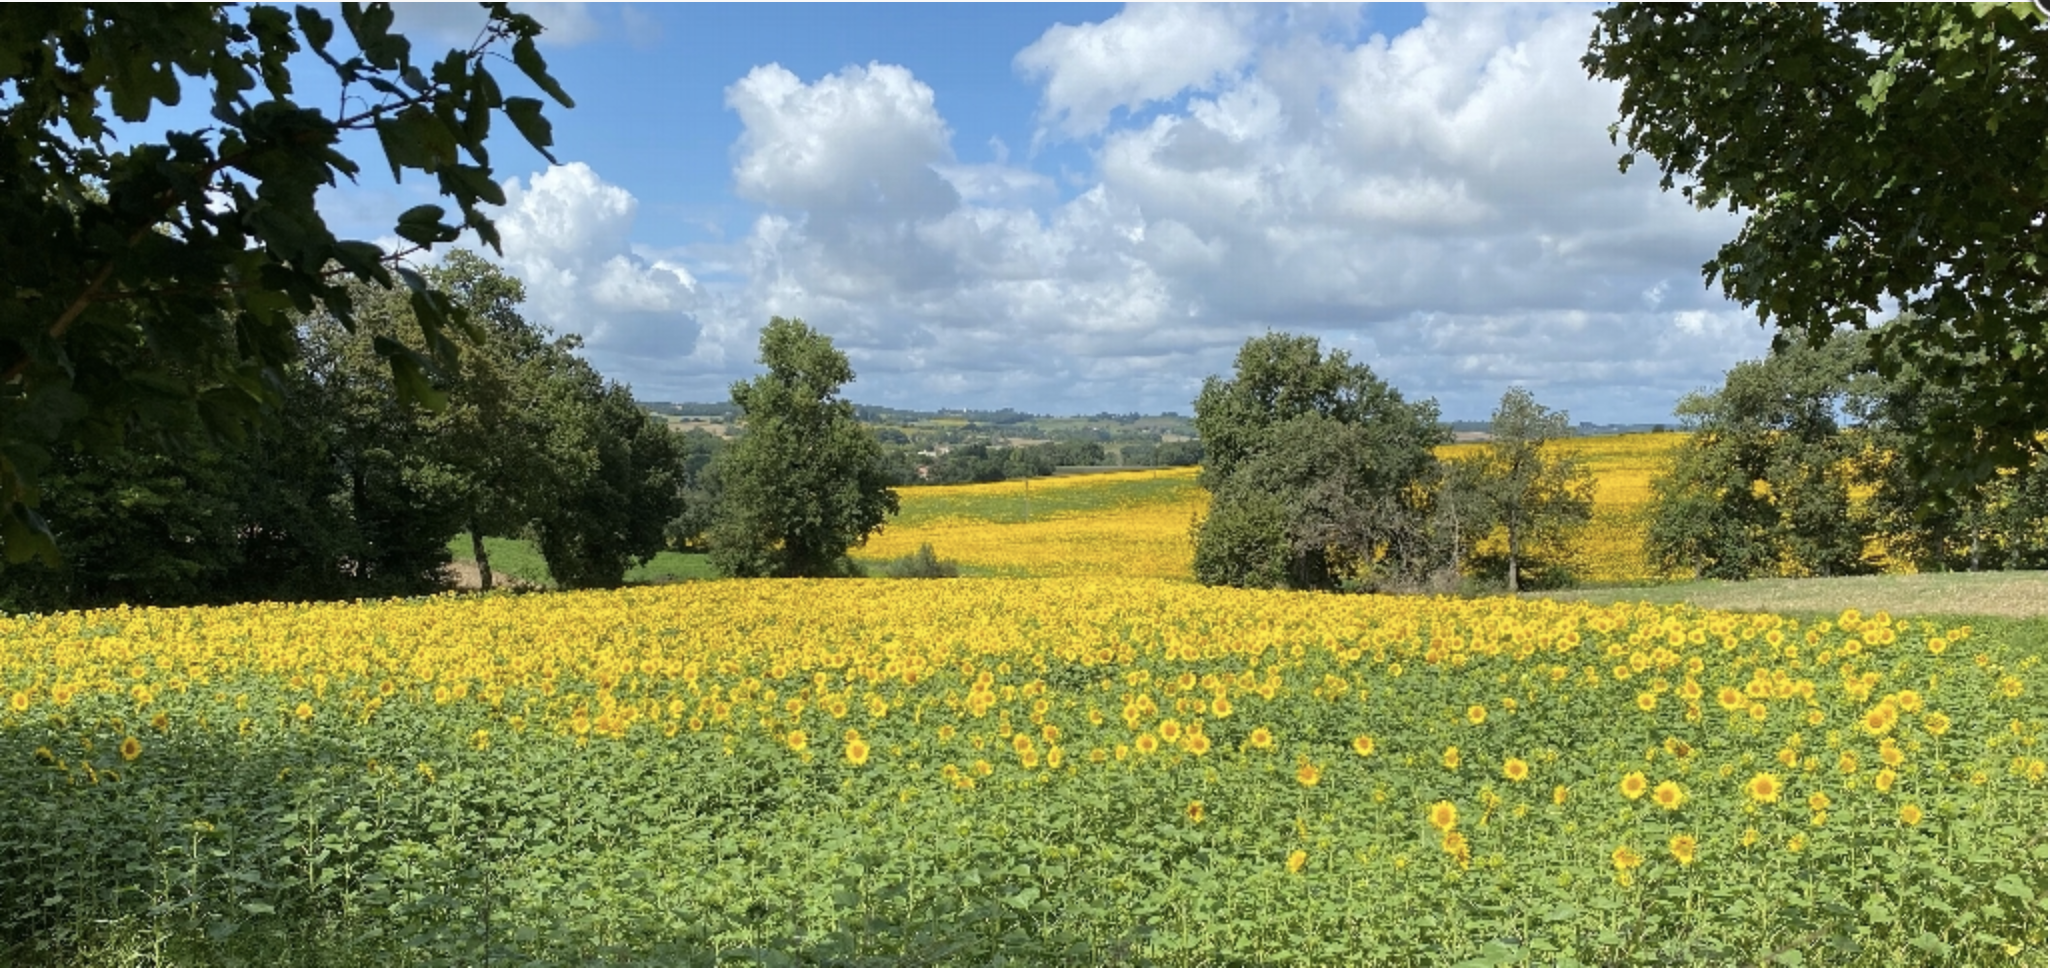 Sunflower Field, Le Puy Way